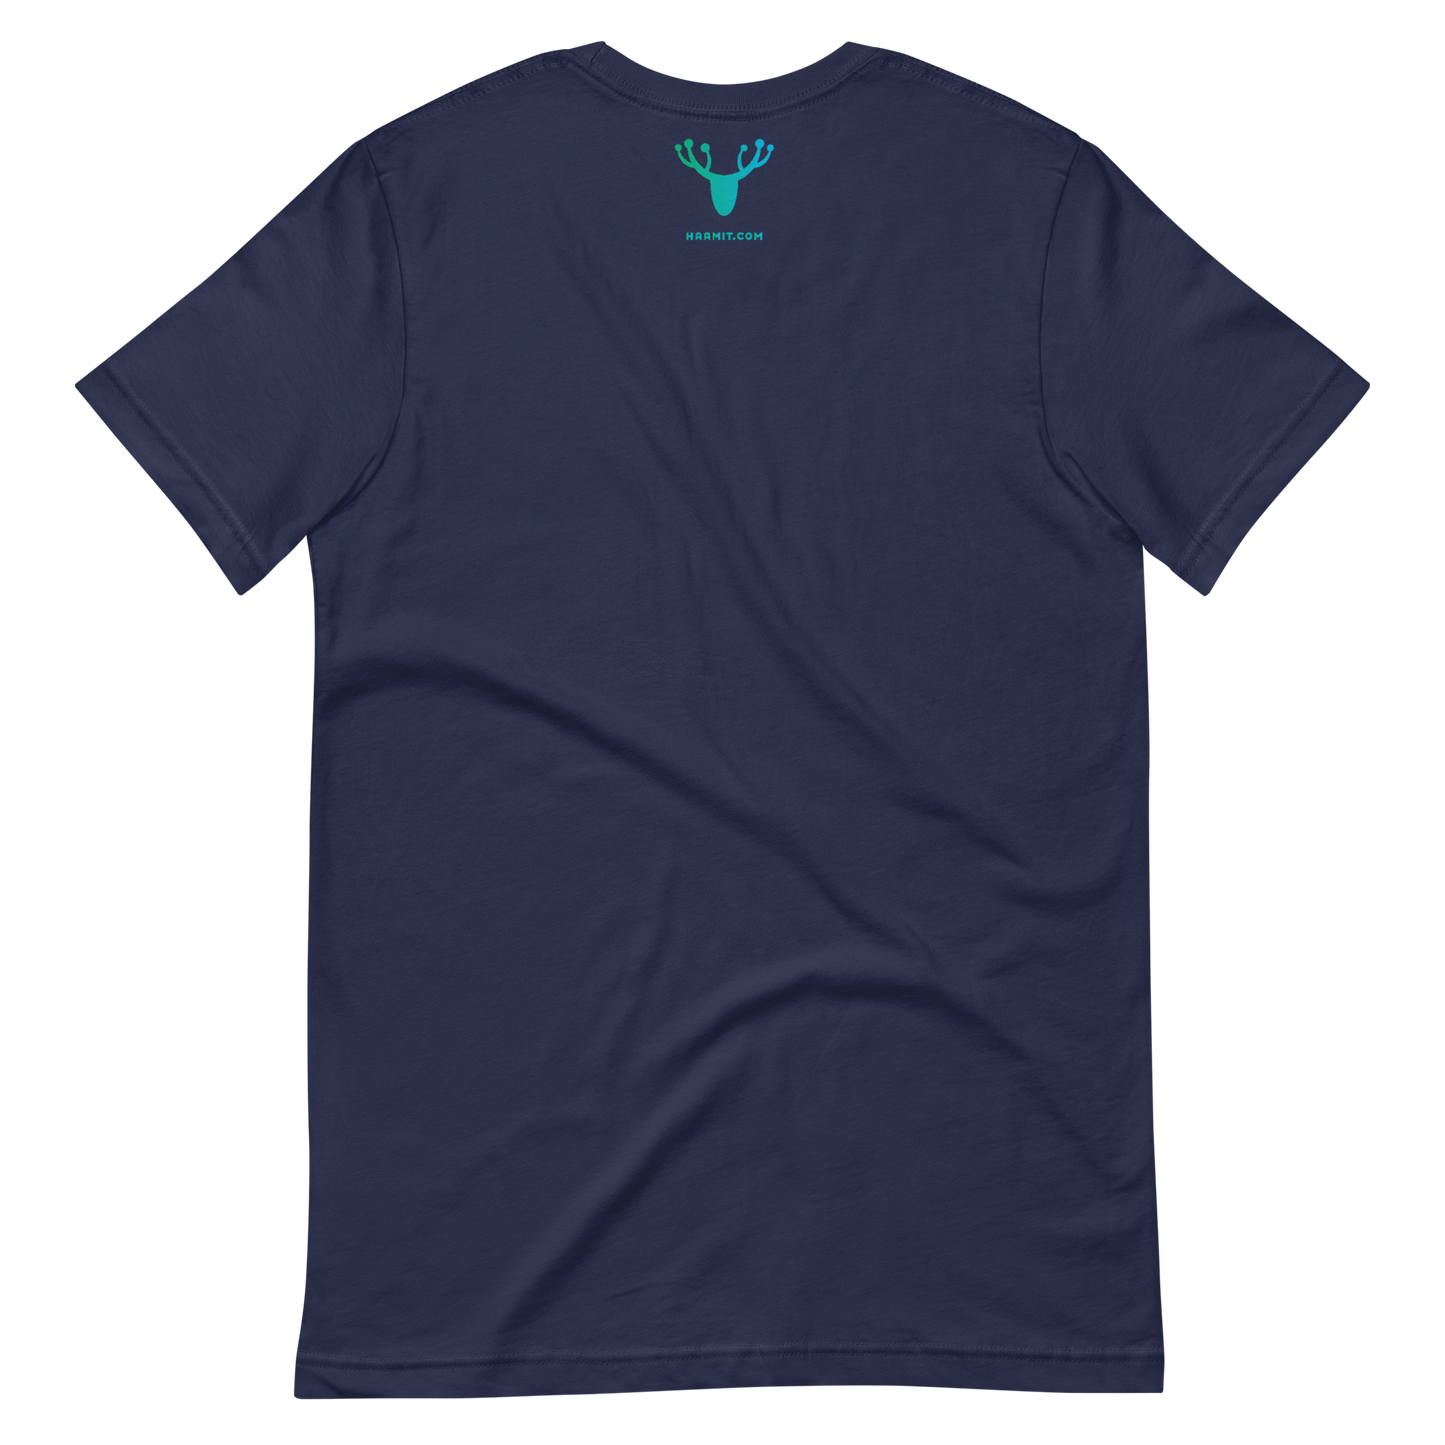 T-Shirt HAAMIT blau melange